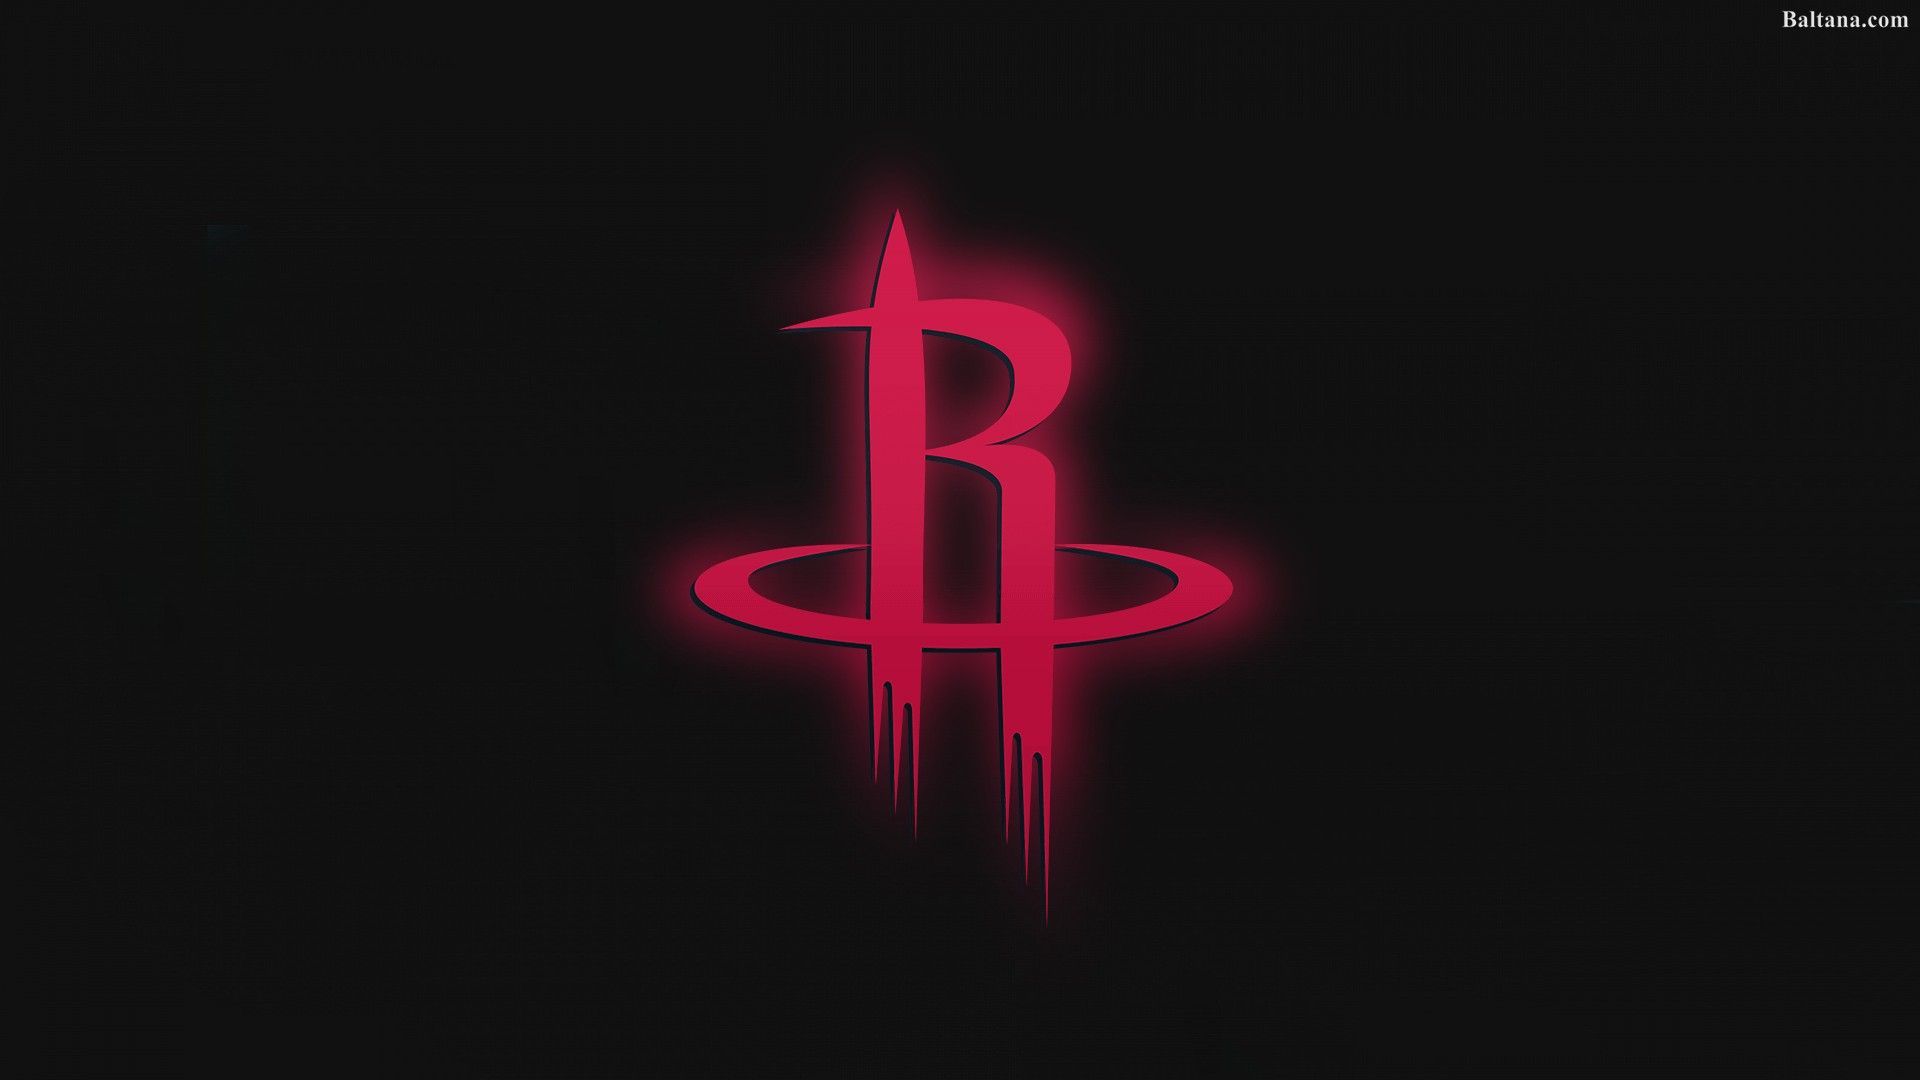 Houston Rockets Wallpaper Free Houston Rockets Background